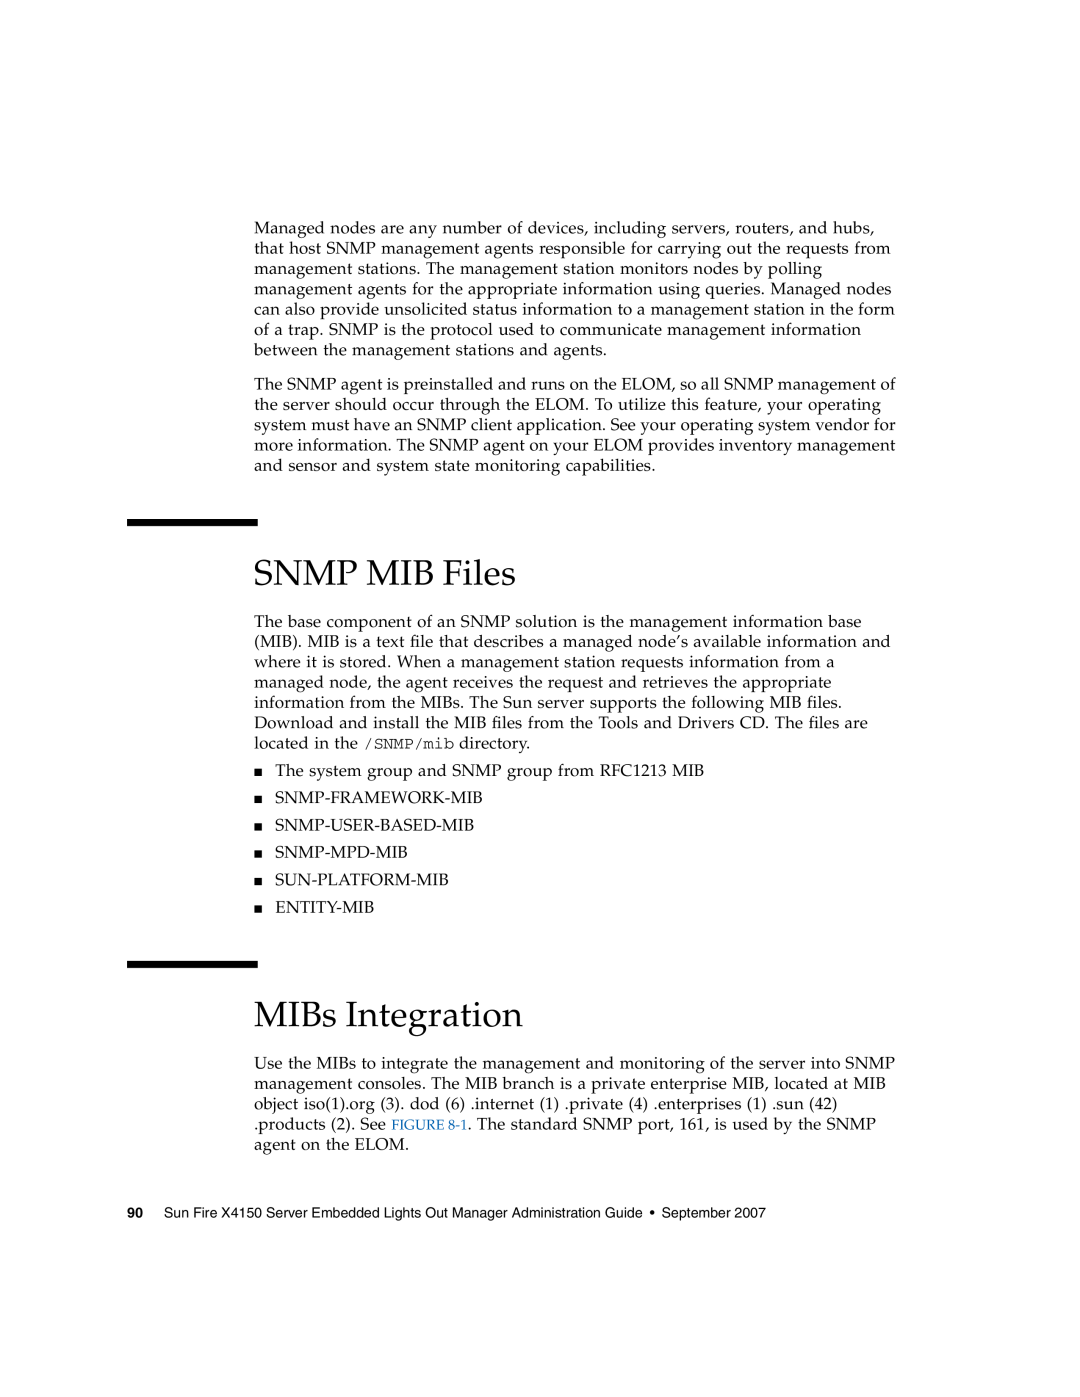 Sun Microsystems X4150 manual SNMP MIB Files, MIBs Integration 